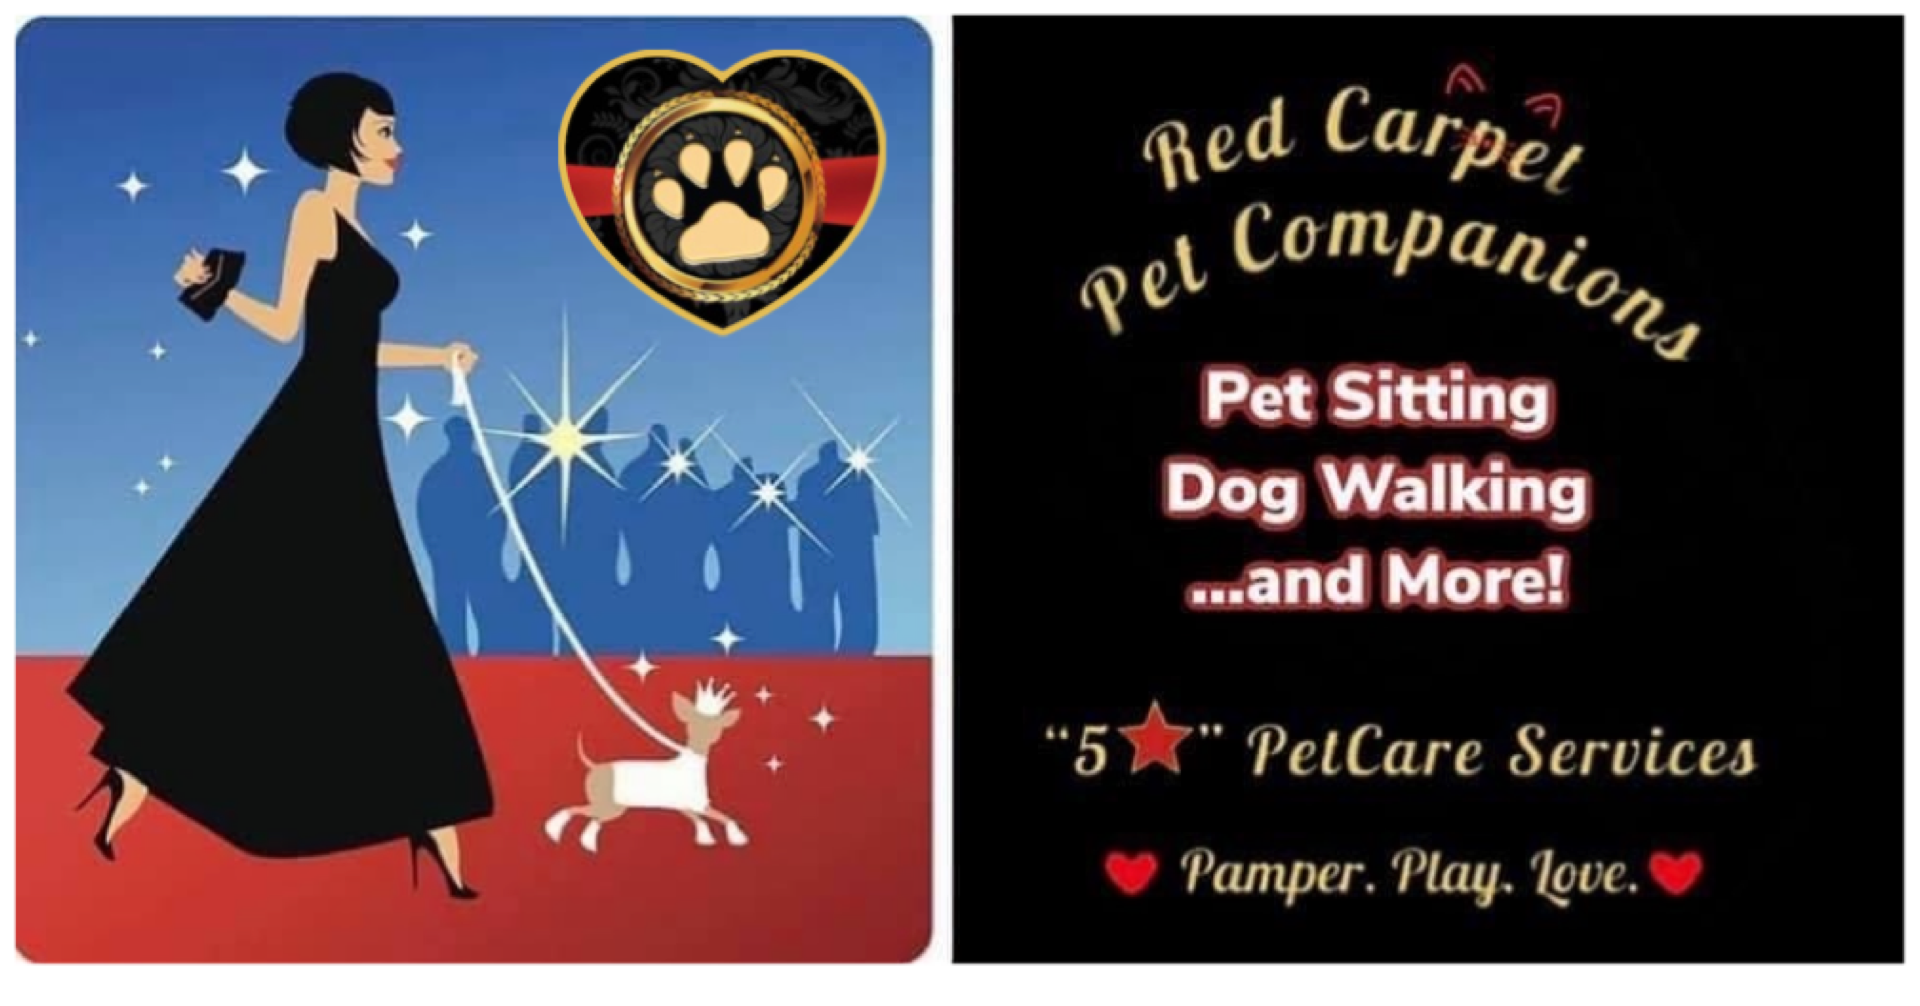 Red Carpet Pet Companions